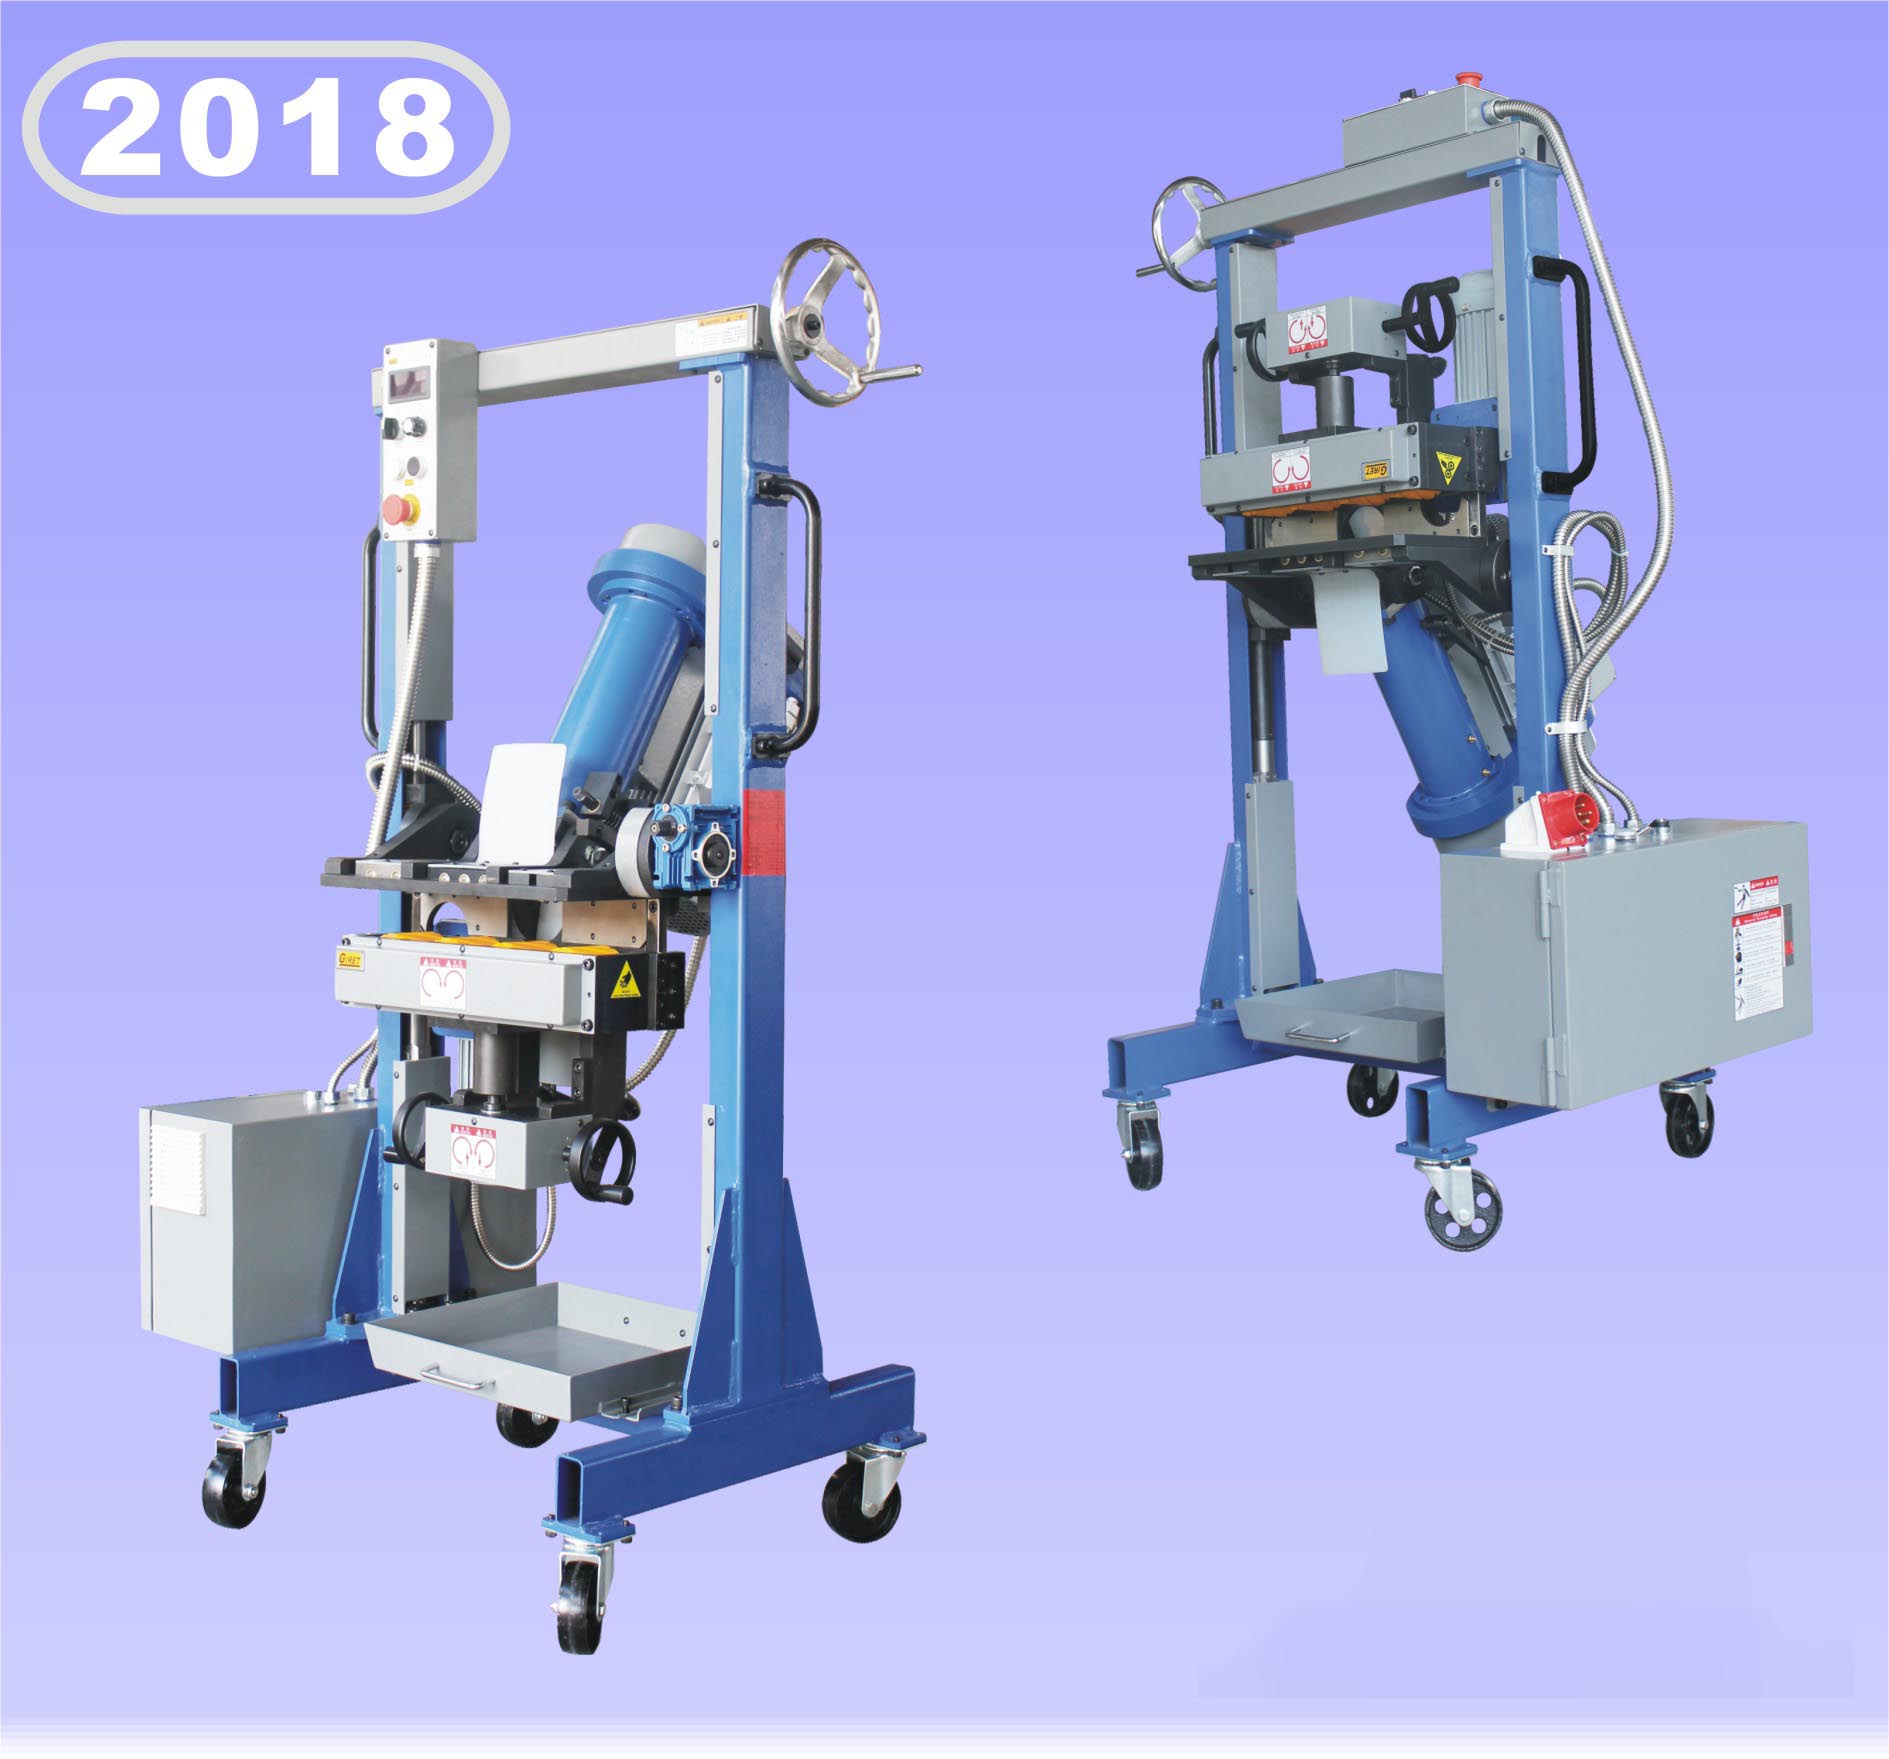 2018-GMMA-60R K edge  milling machine